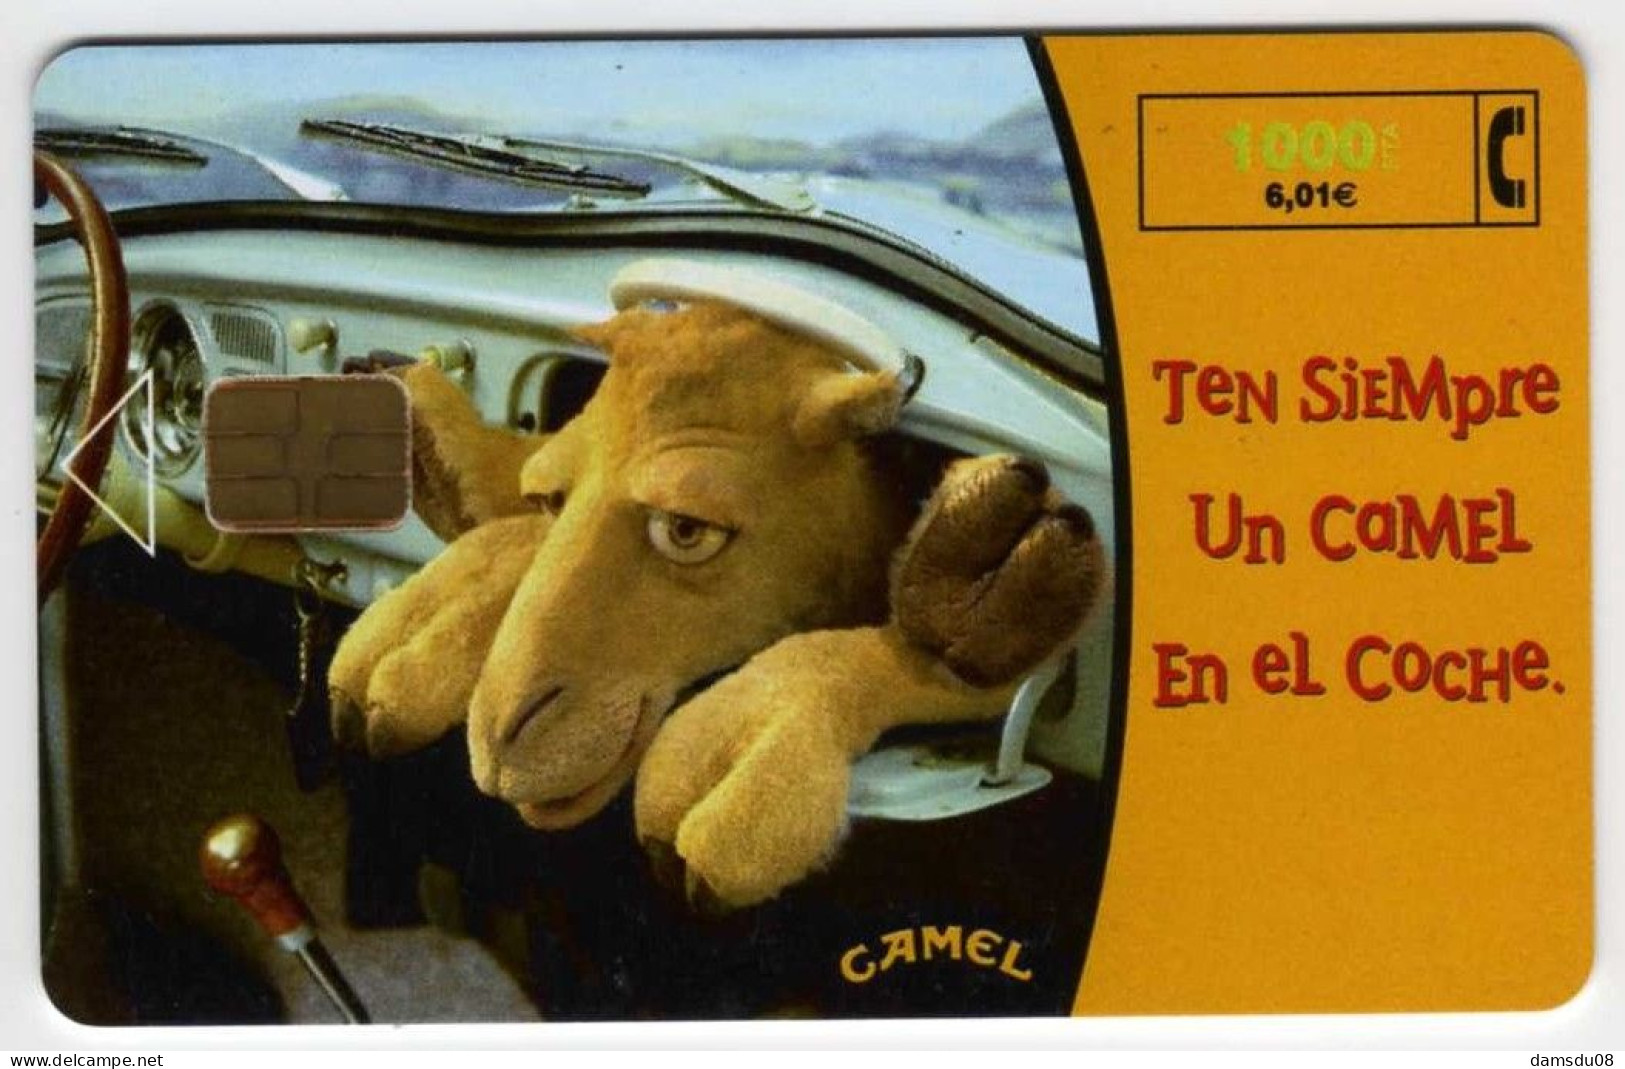 Espagne 1000 PTA Camel 01/99 1035000 Exemplaires Vide - Basisuitgaven